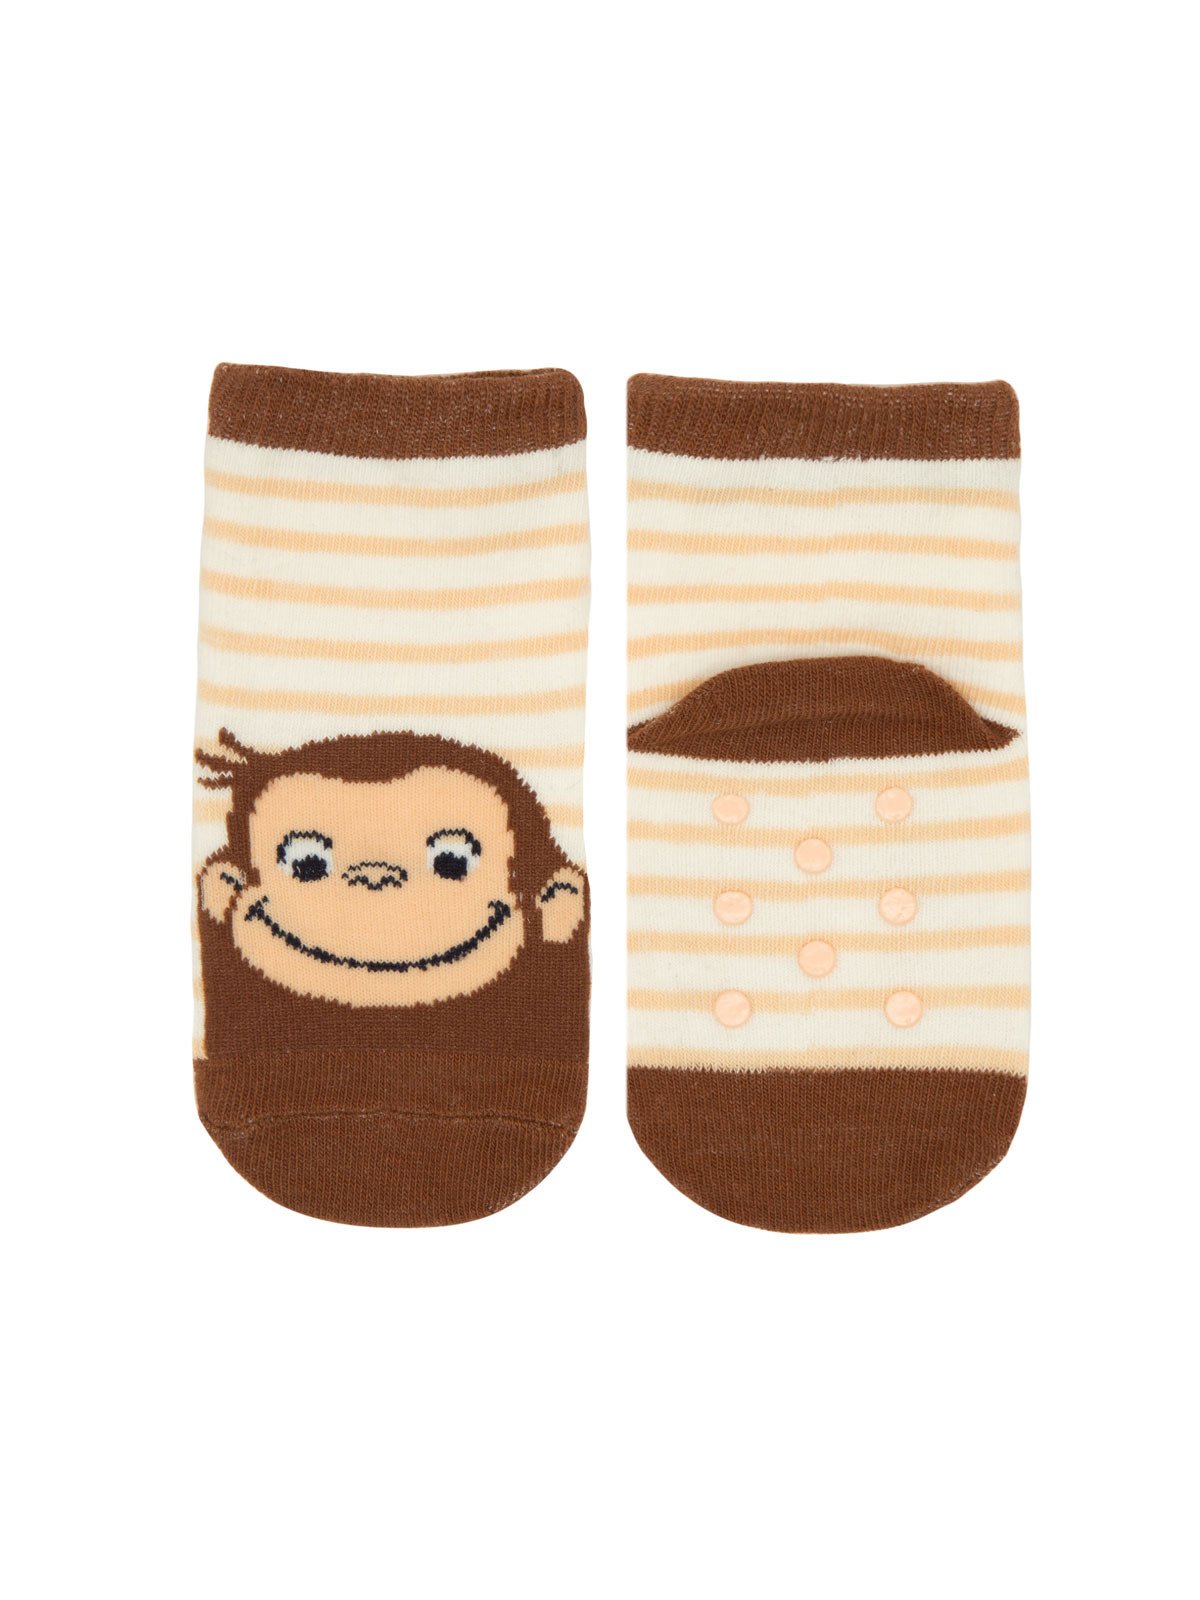 Curious George Kids Socks